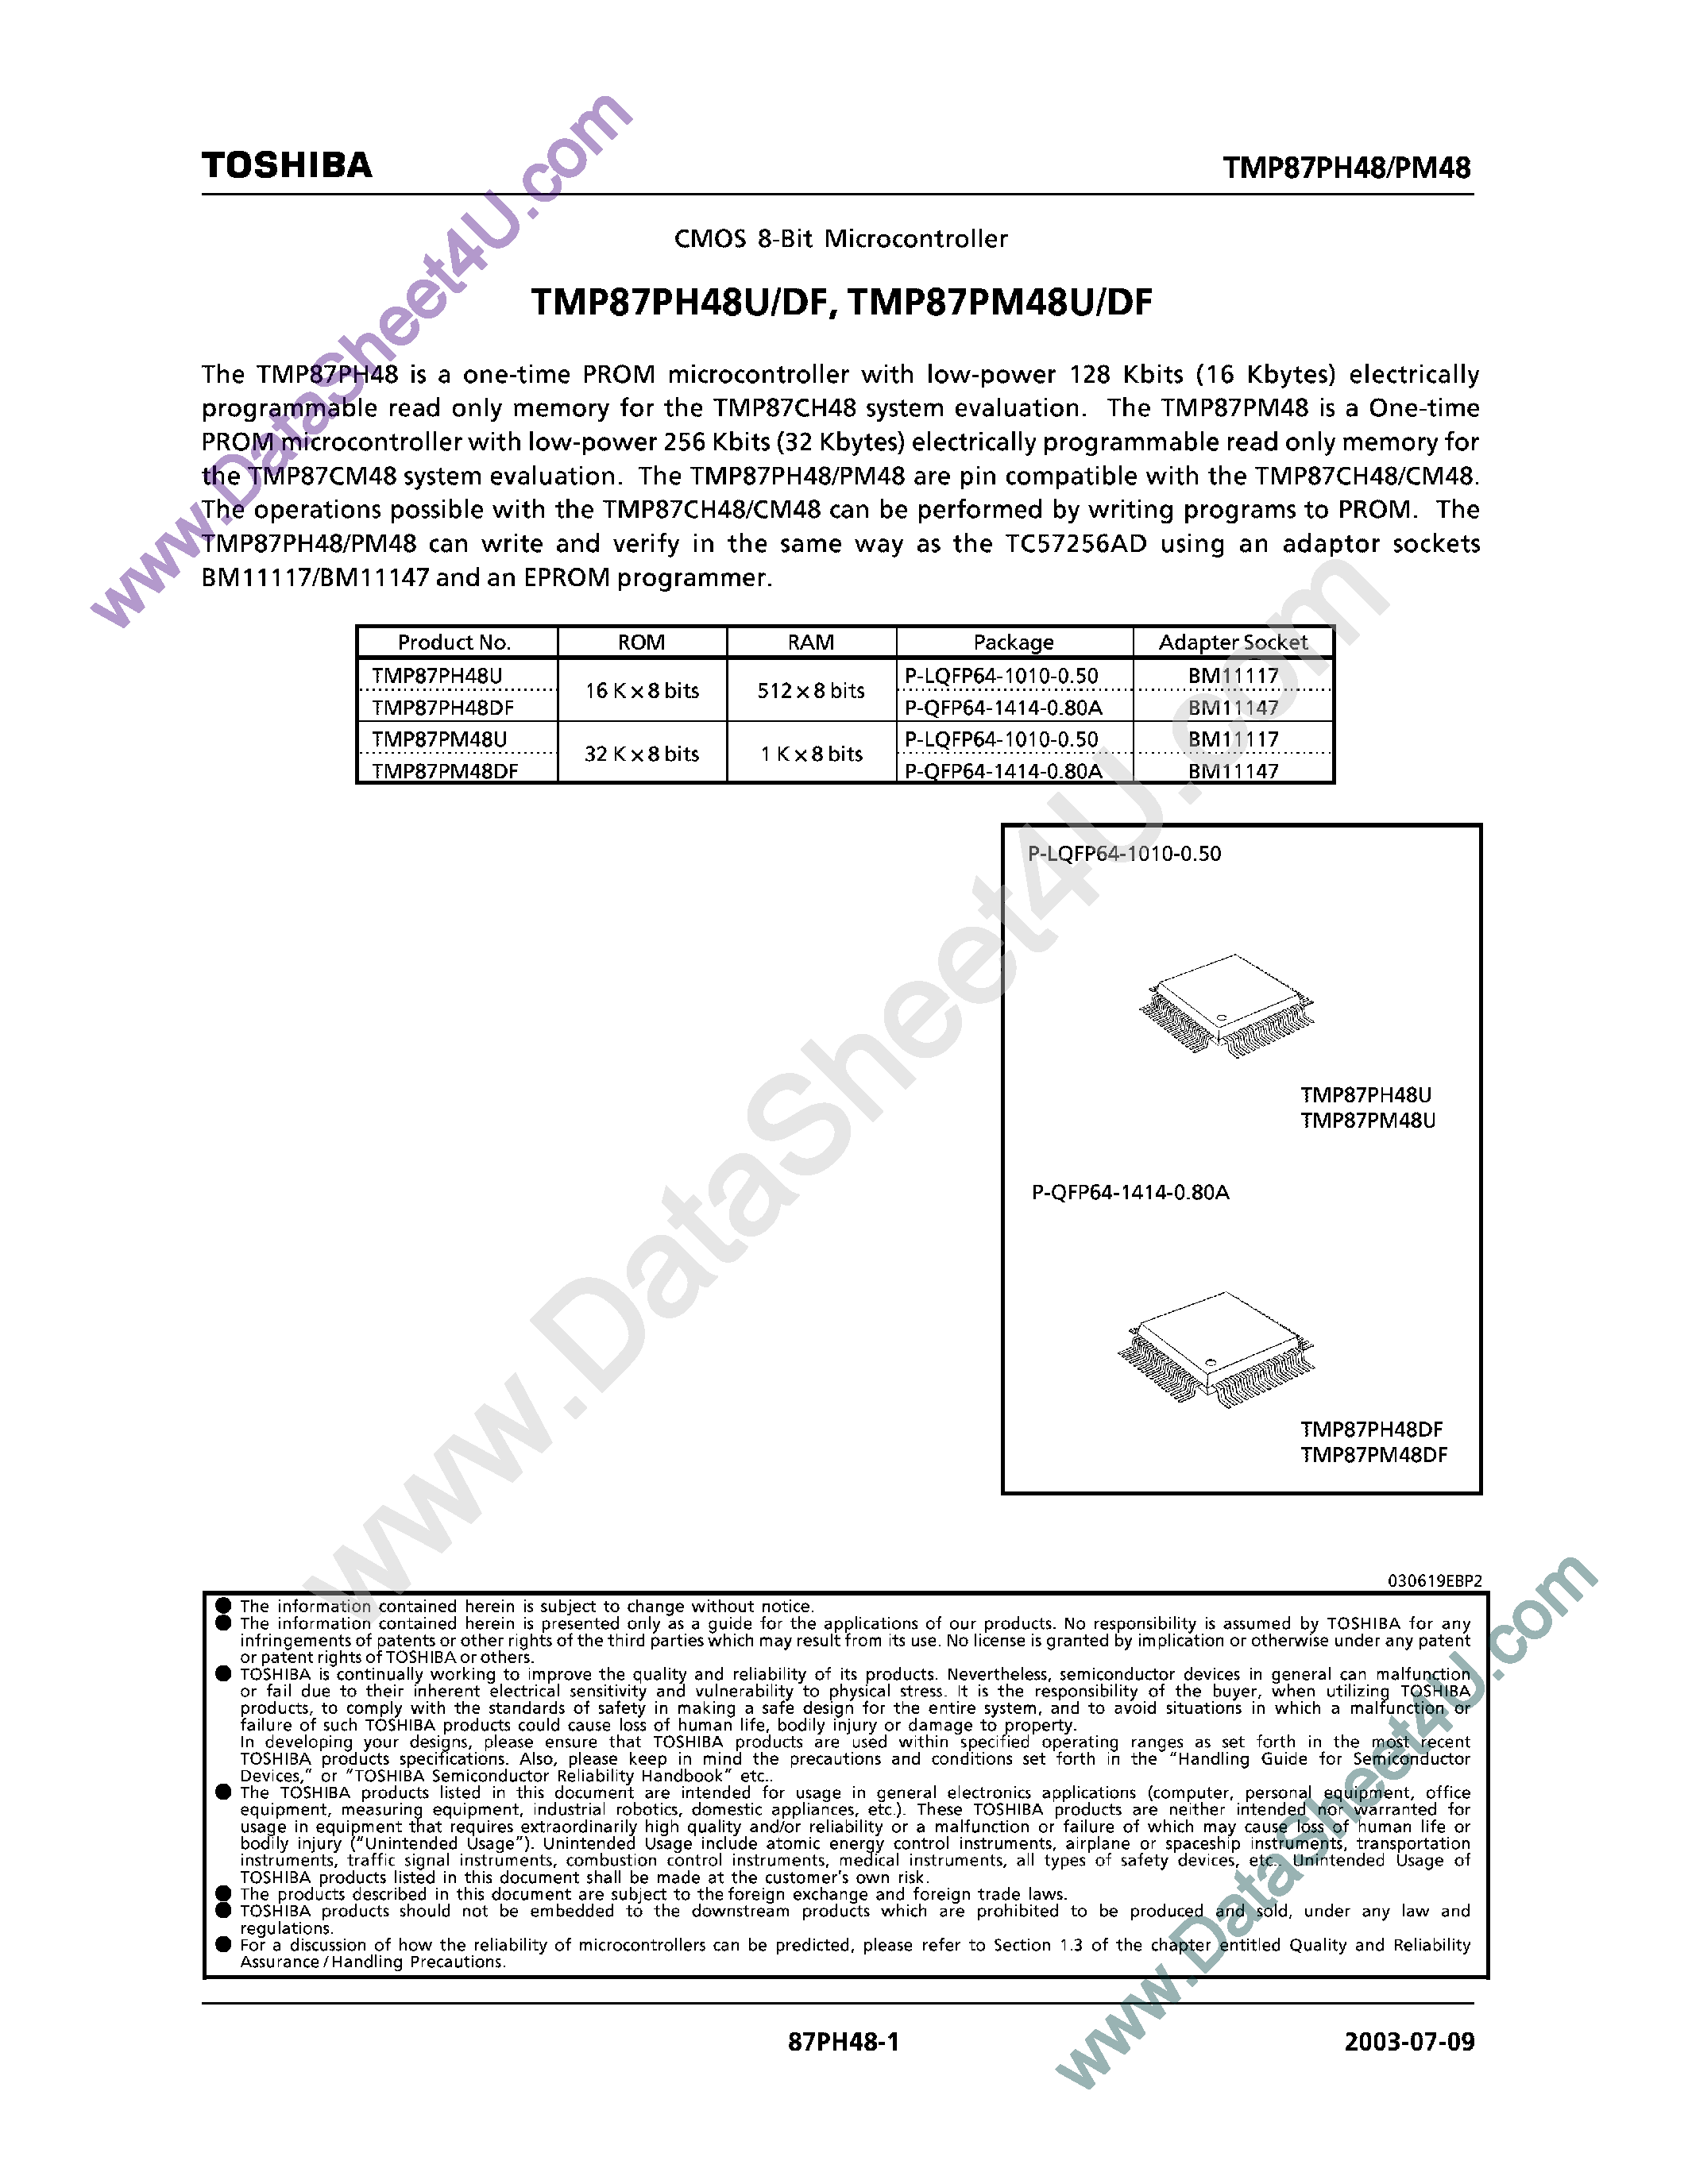 Datasheet TMP87PH48DF - (TMP87PM48U/DF / TMP87PH48U/DF) CMOS 8-Bit Microcontroller page 1